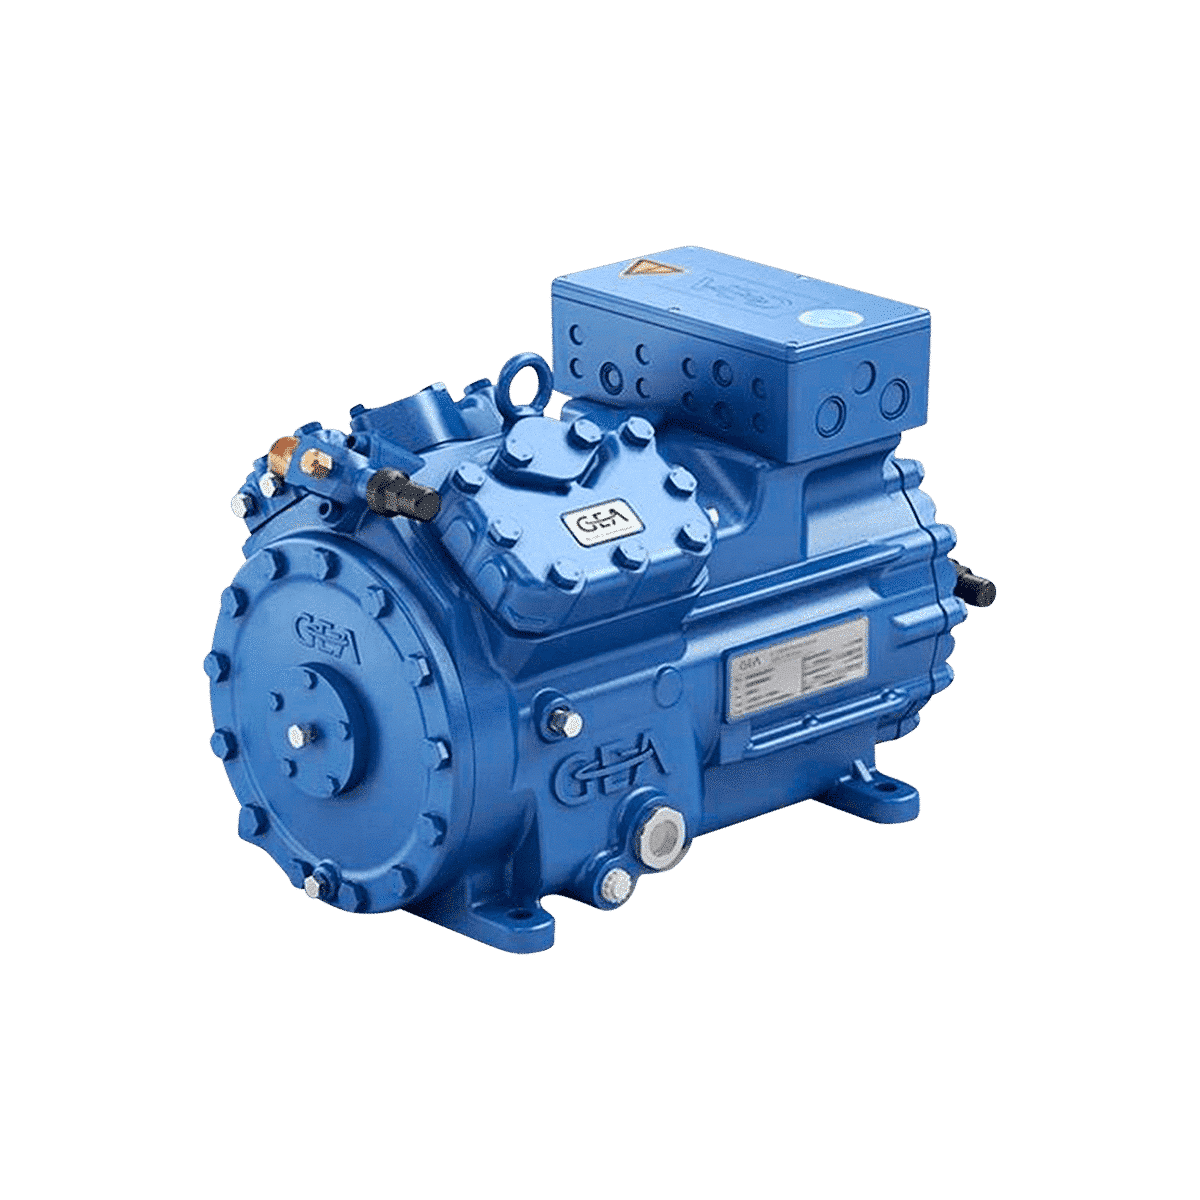 Semi-hermetische zuigercompressor Bock HGX34e/315-4 220-240V D/380-420V S-3-50HZ